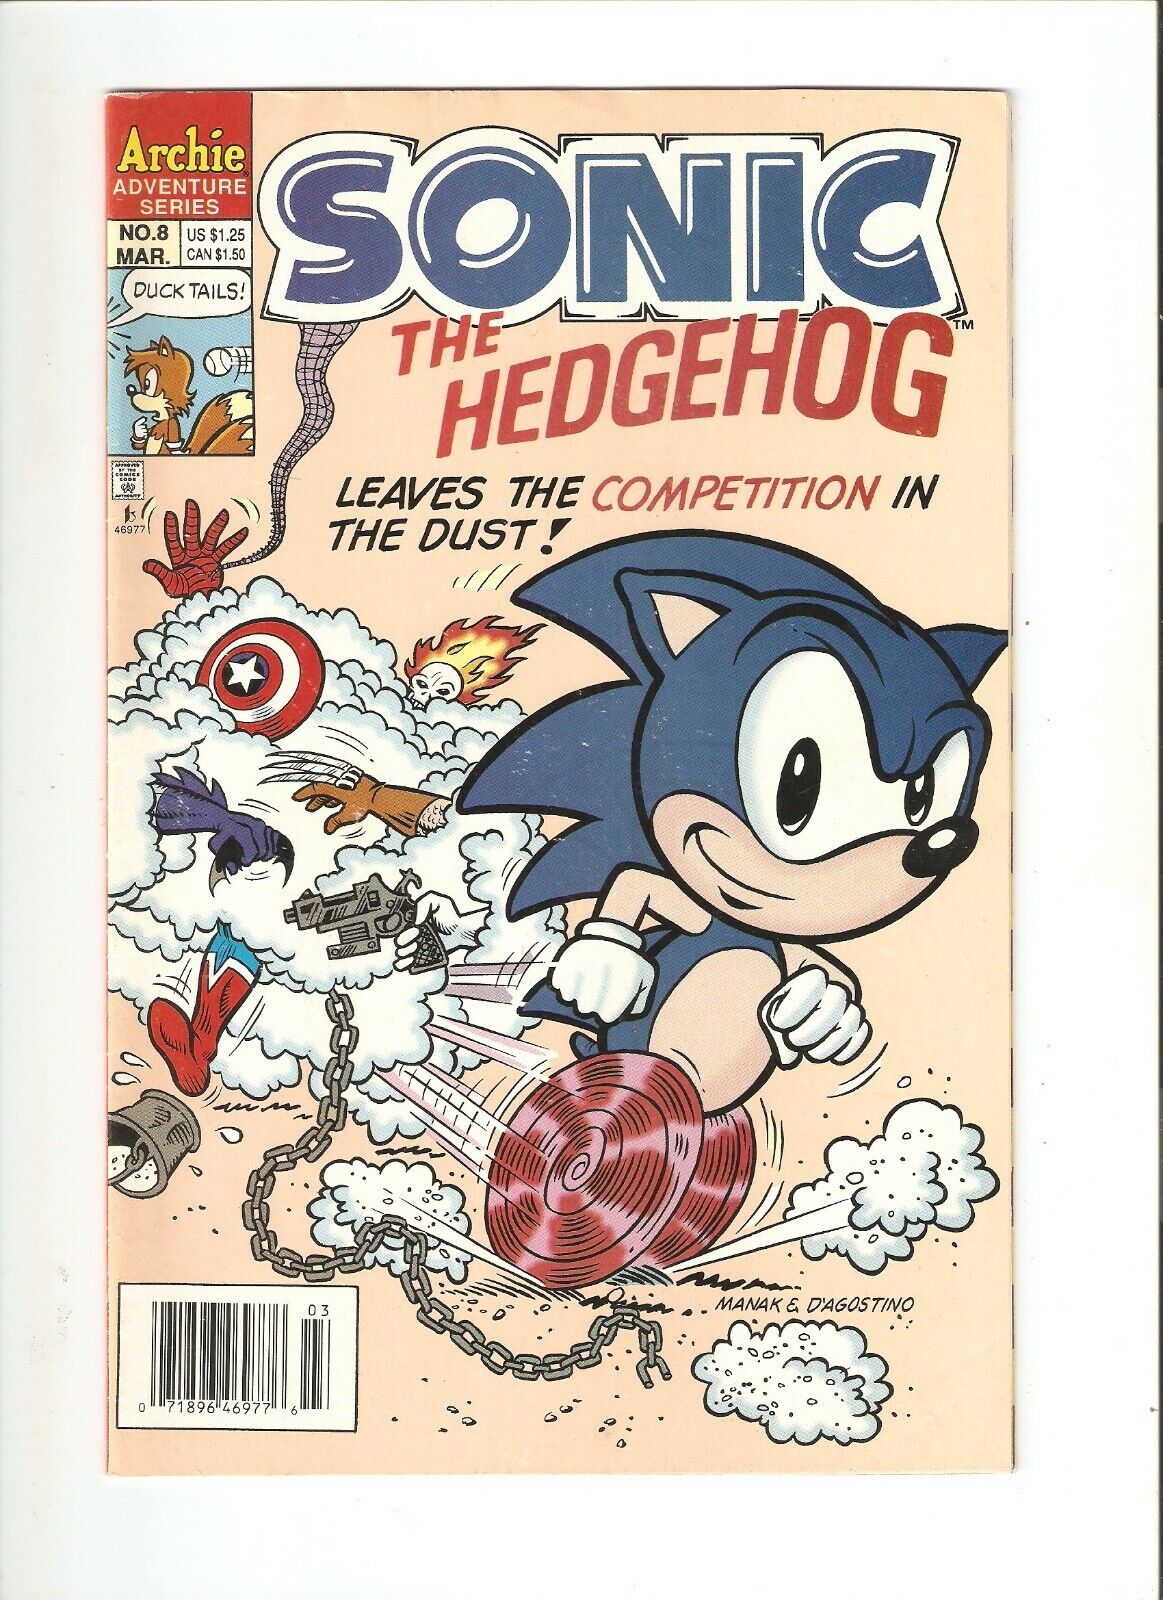 SONIC THE HEDGEHOG, # 8, MAR. 1994, NEWS STAND EDITION, VF